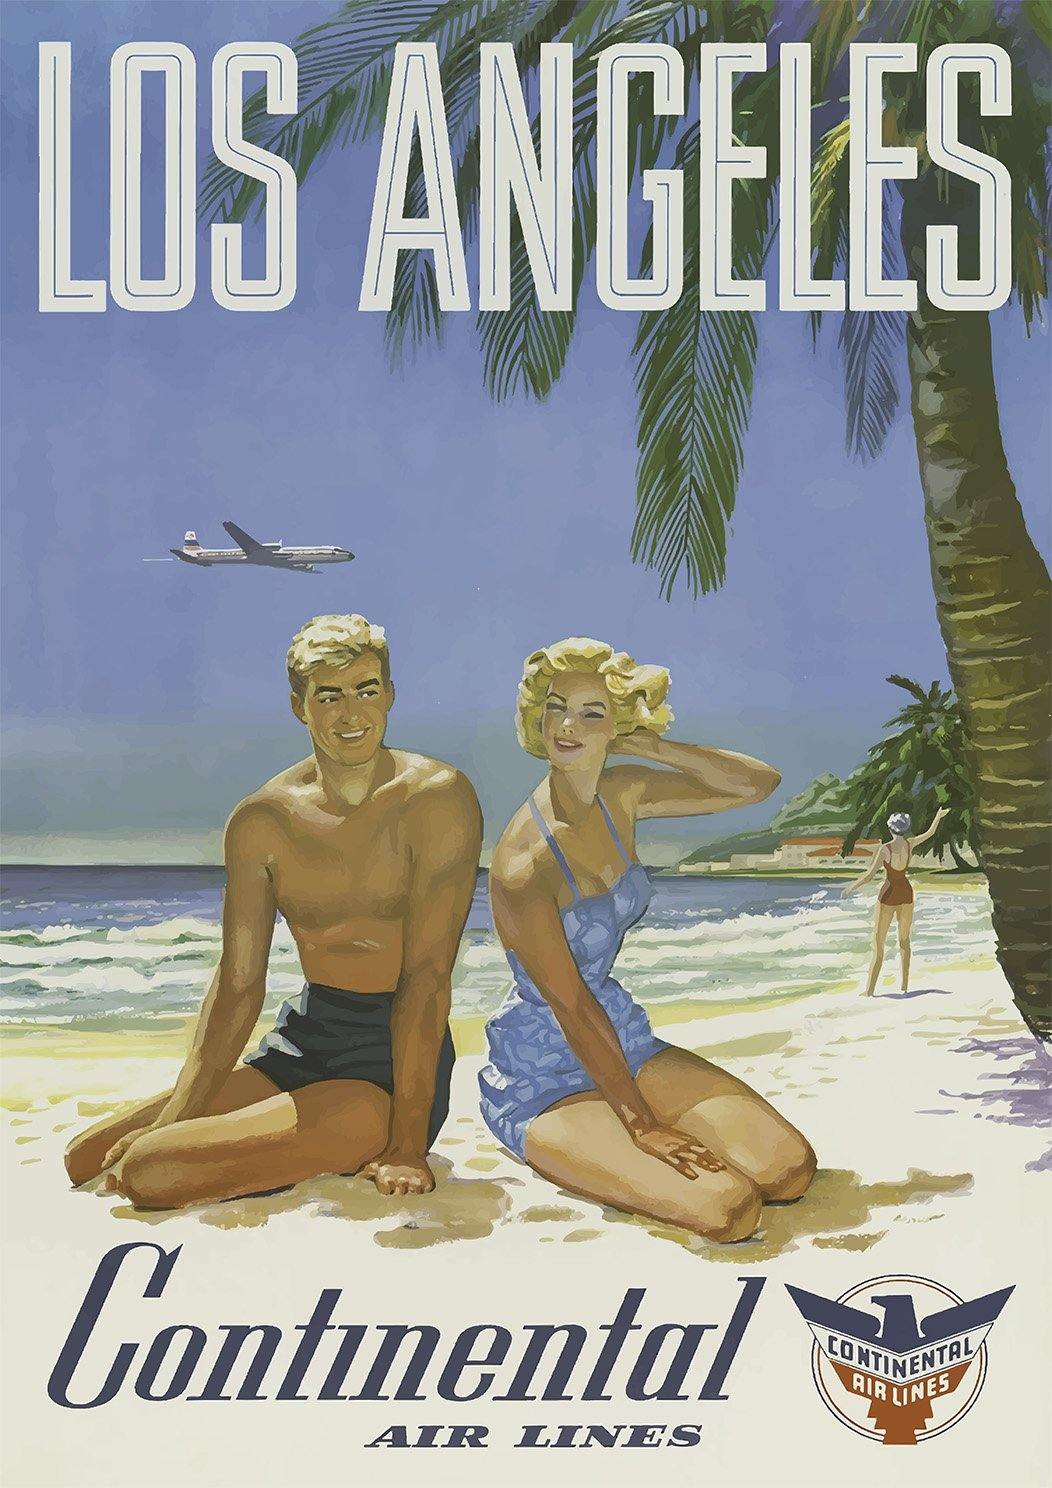 LA BEACH POSTER: Vintage California Travel Advert - Pimlico Prints